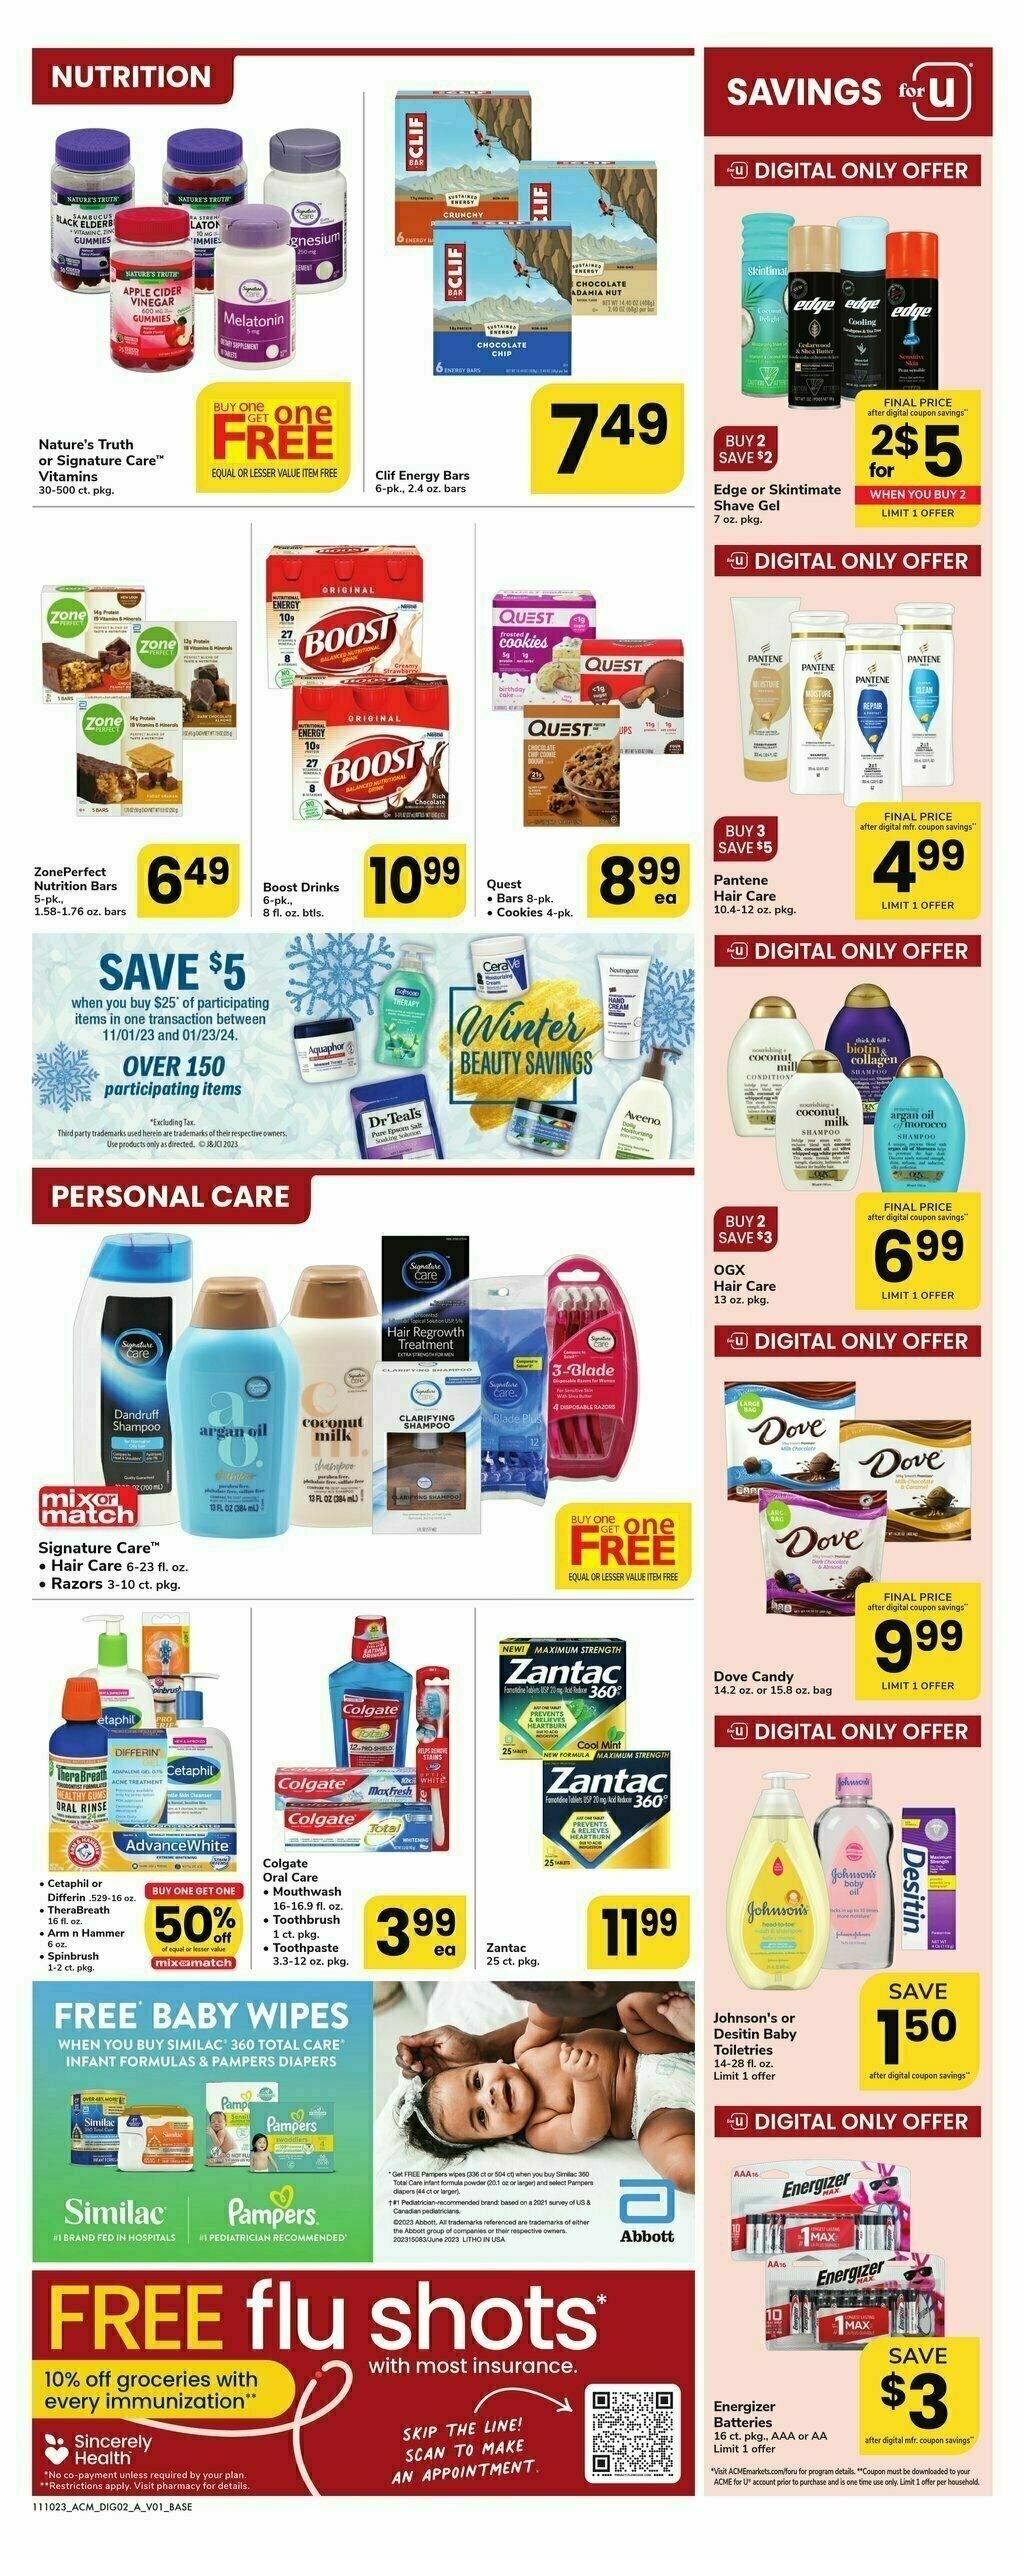 ACME Markets Health, Home & Beauty Weekly Ad from November 10